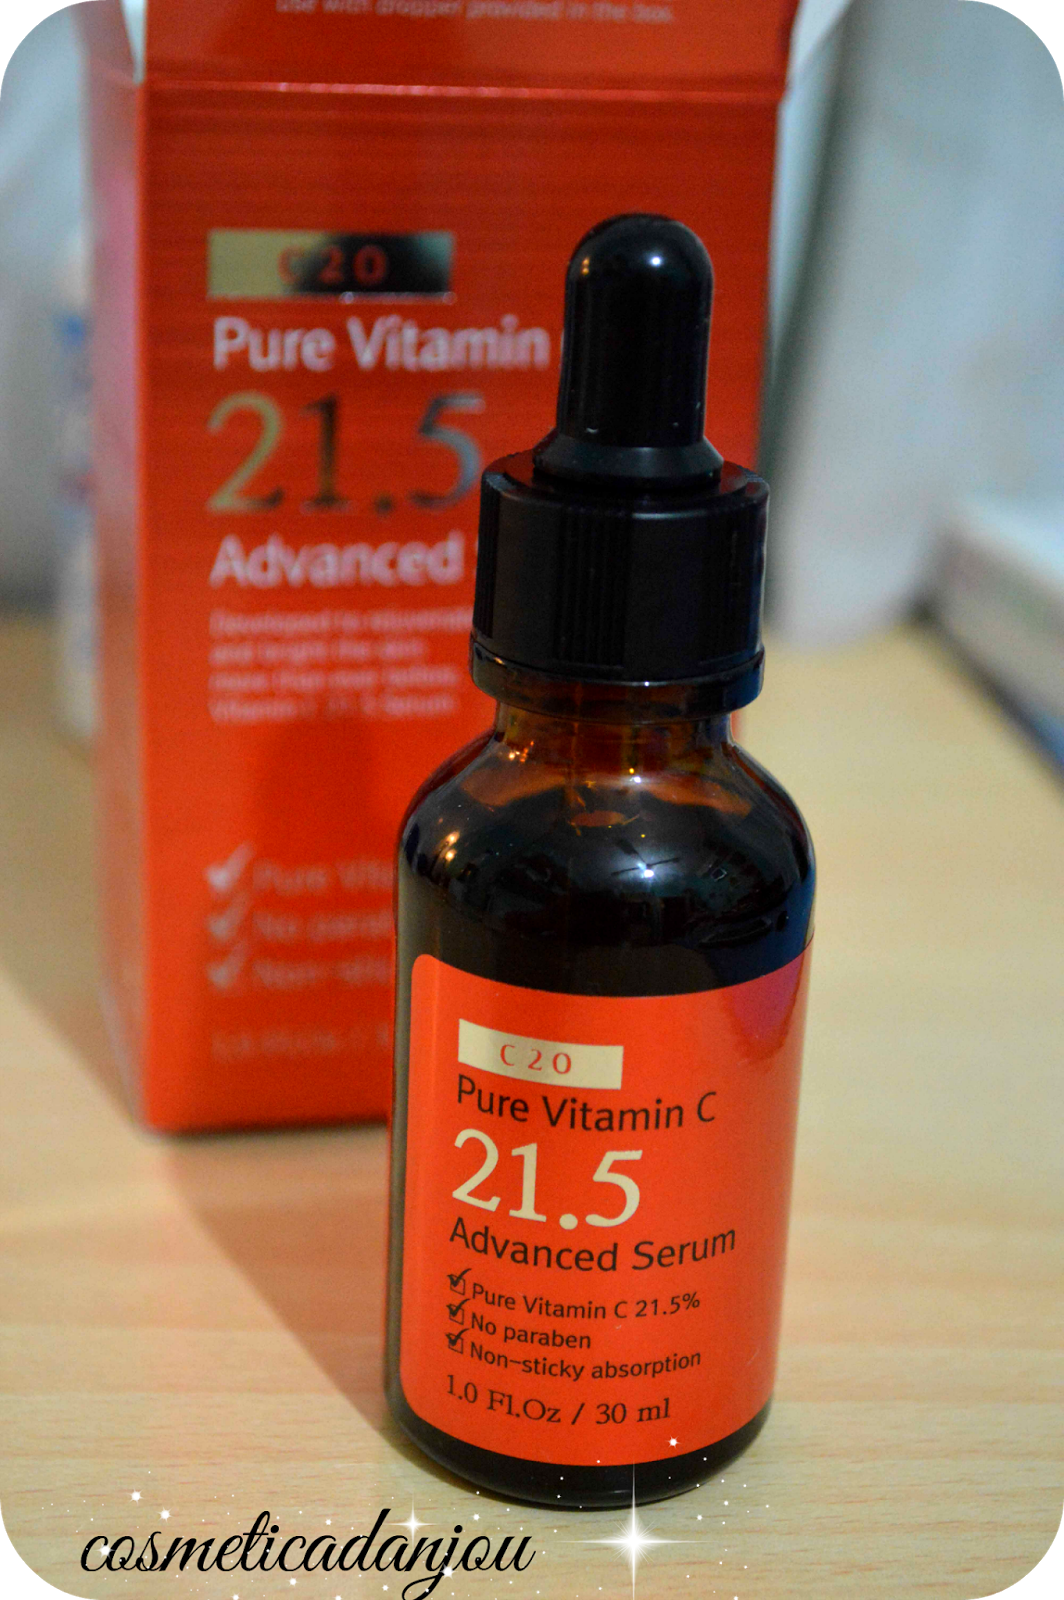 C20 - Pure Vitamin C 21.5 Advanced Serum Review (Wishtrend)